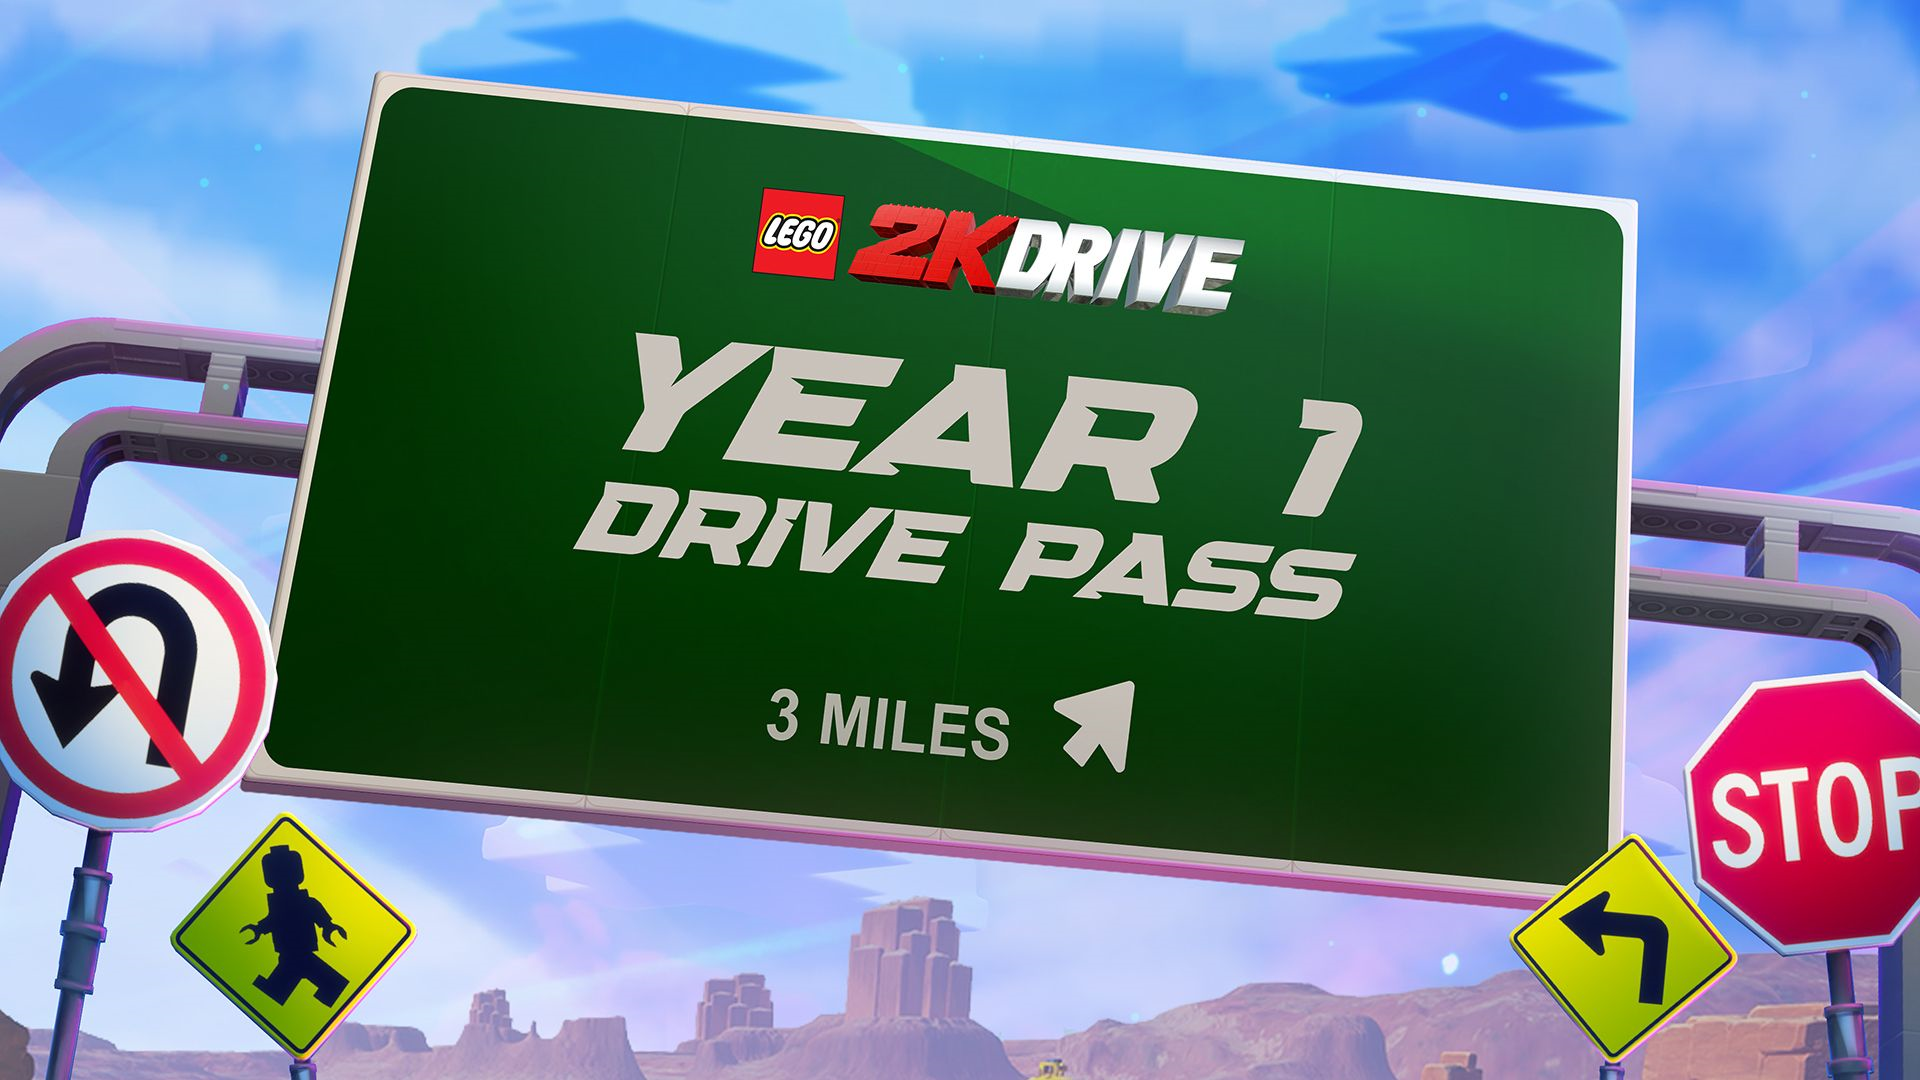 LEGO 2K Drive: Year 1 Drive Pass